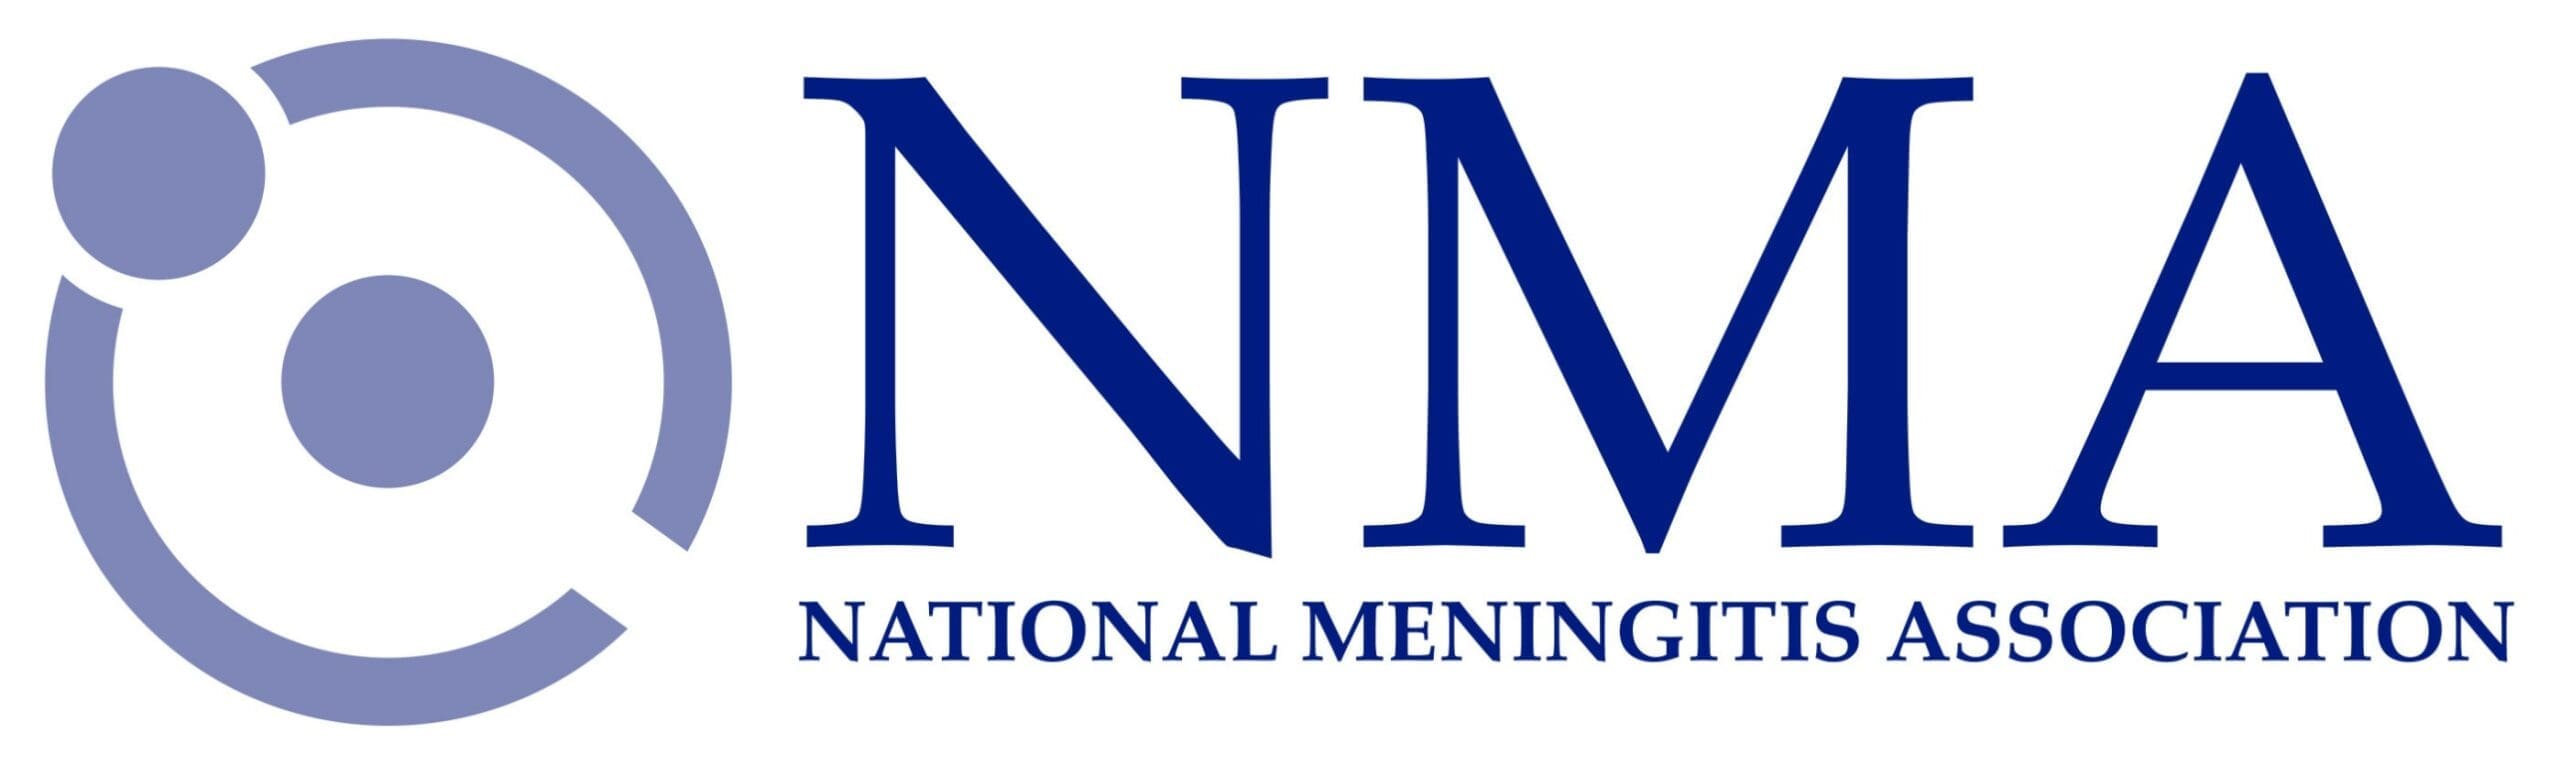 National meningitis association